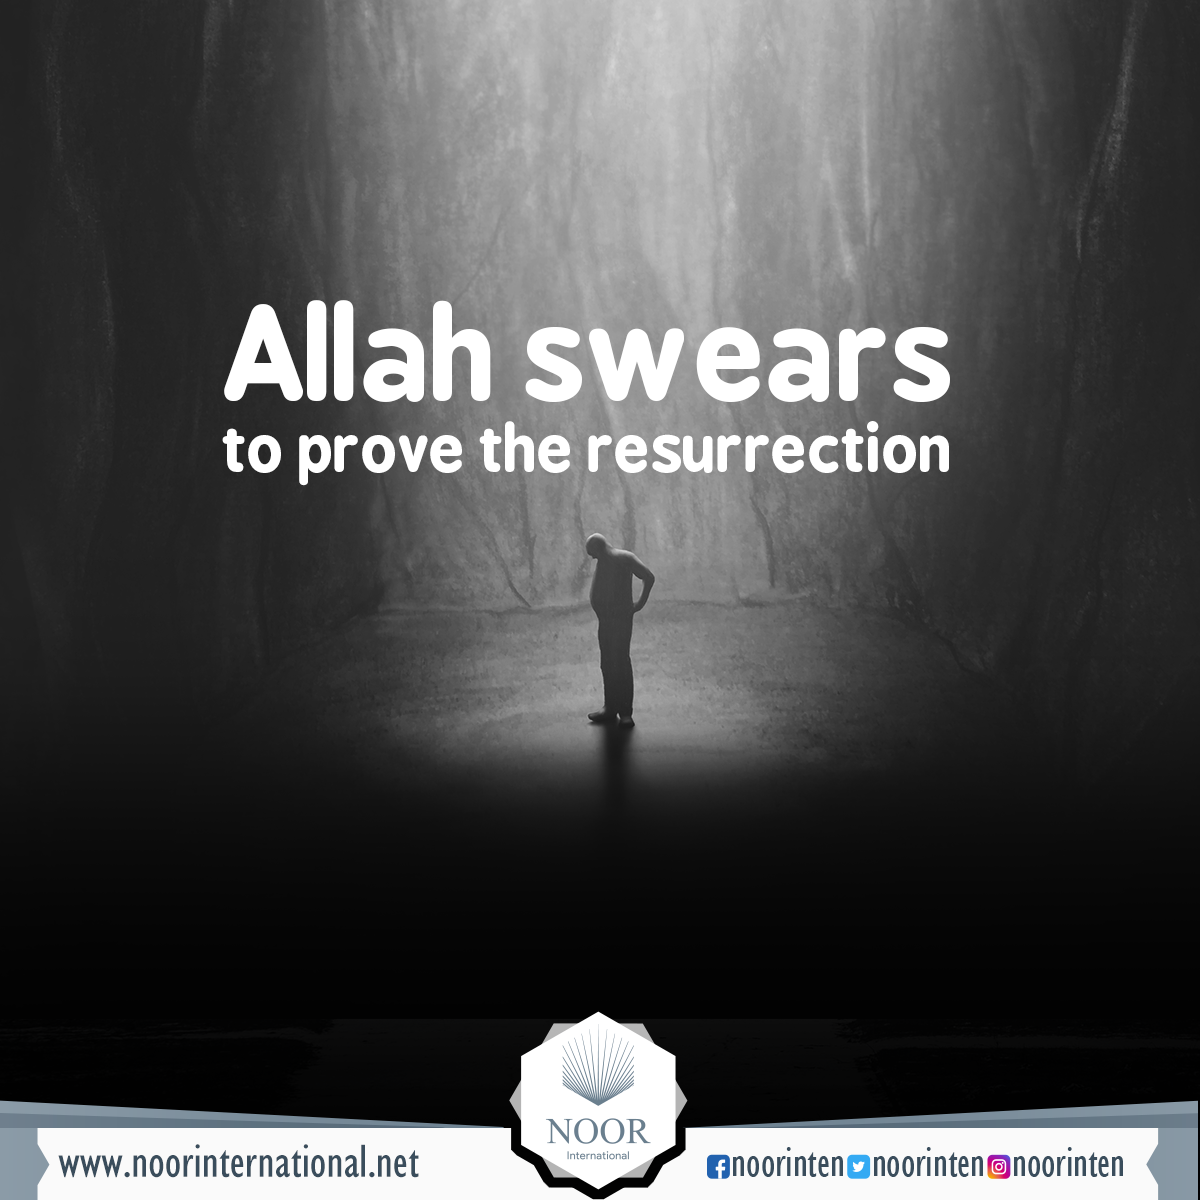 Allah swears to prove the resurrection